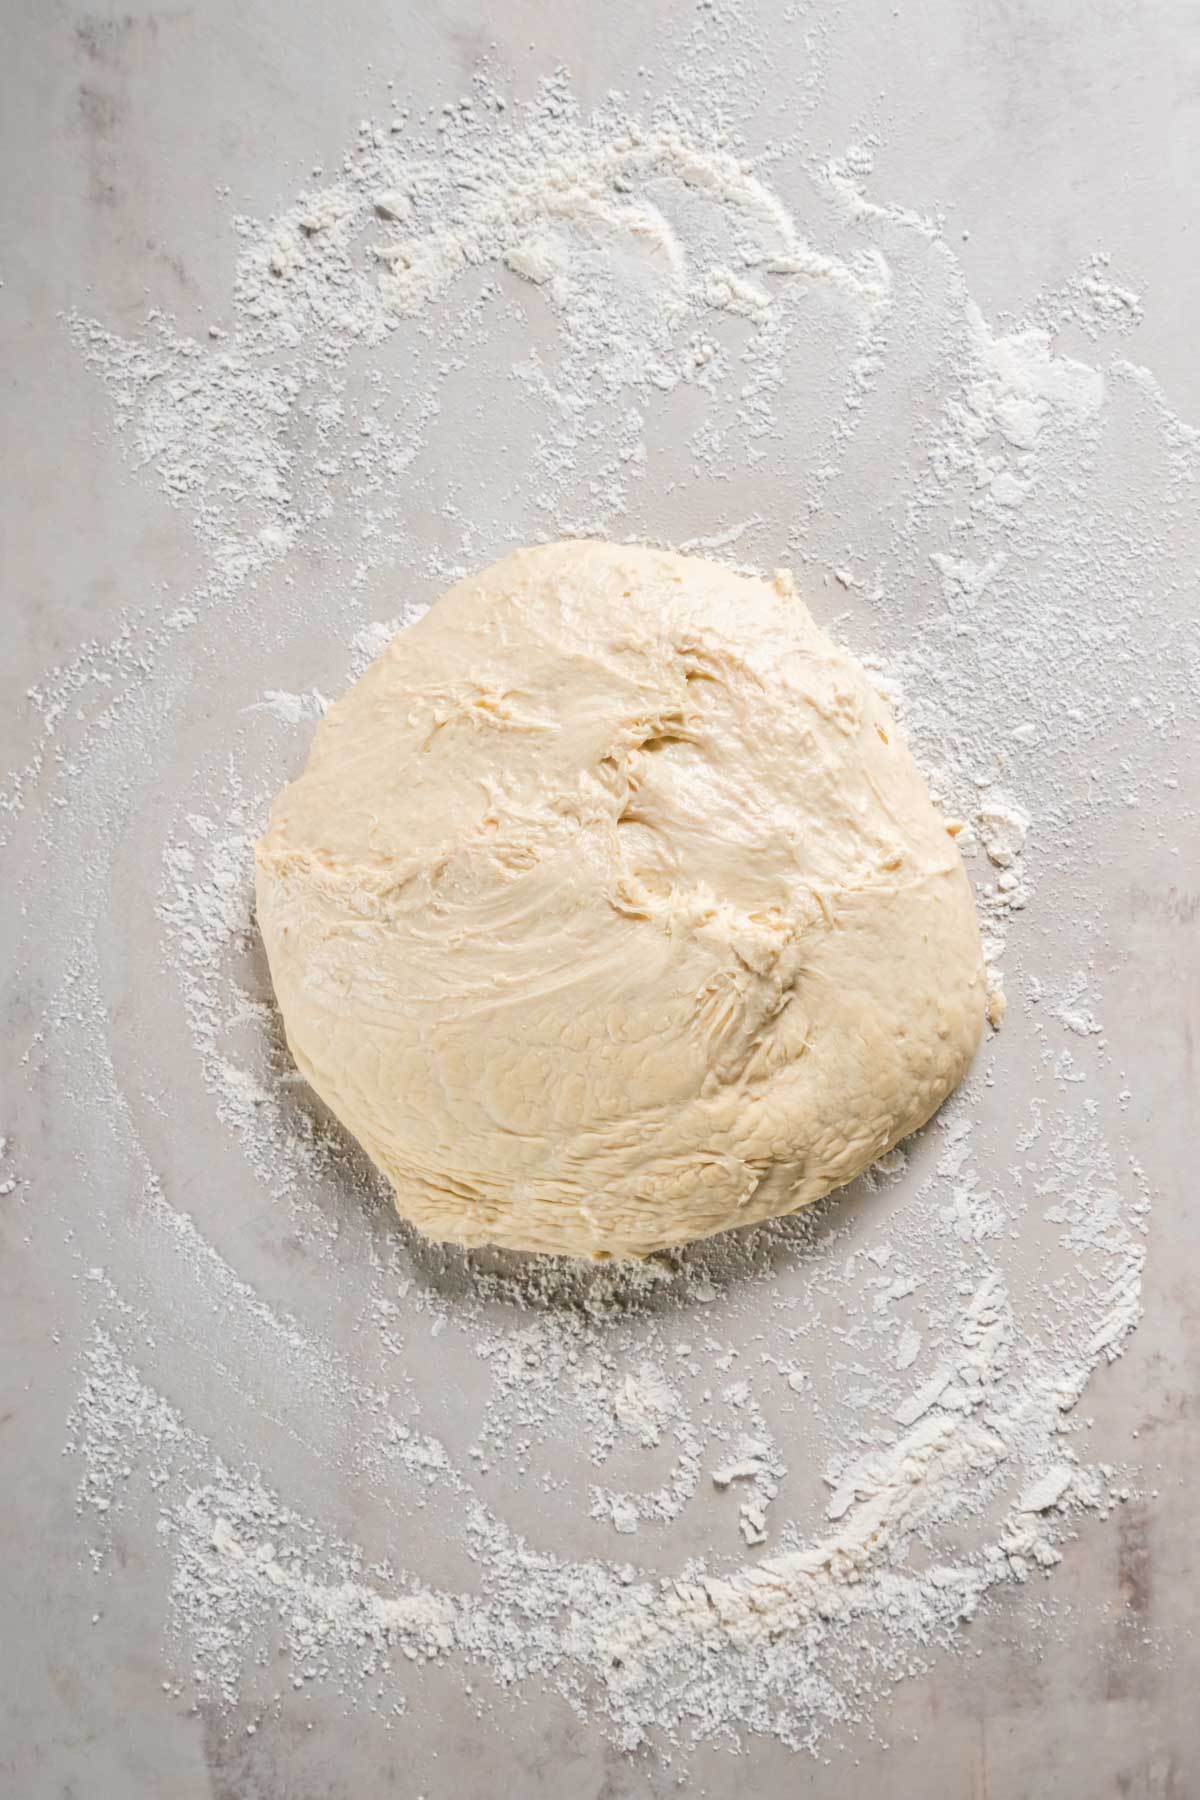 Ball of pizza dough on floured work surface.